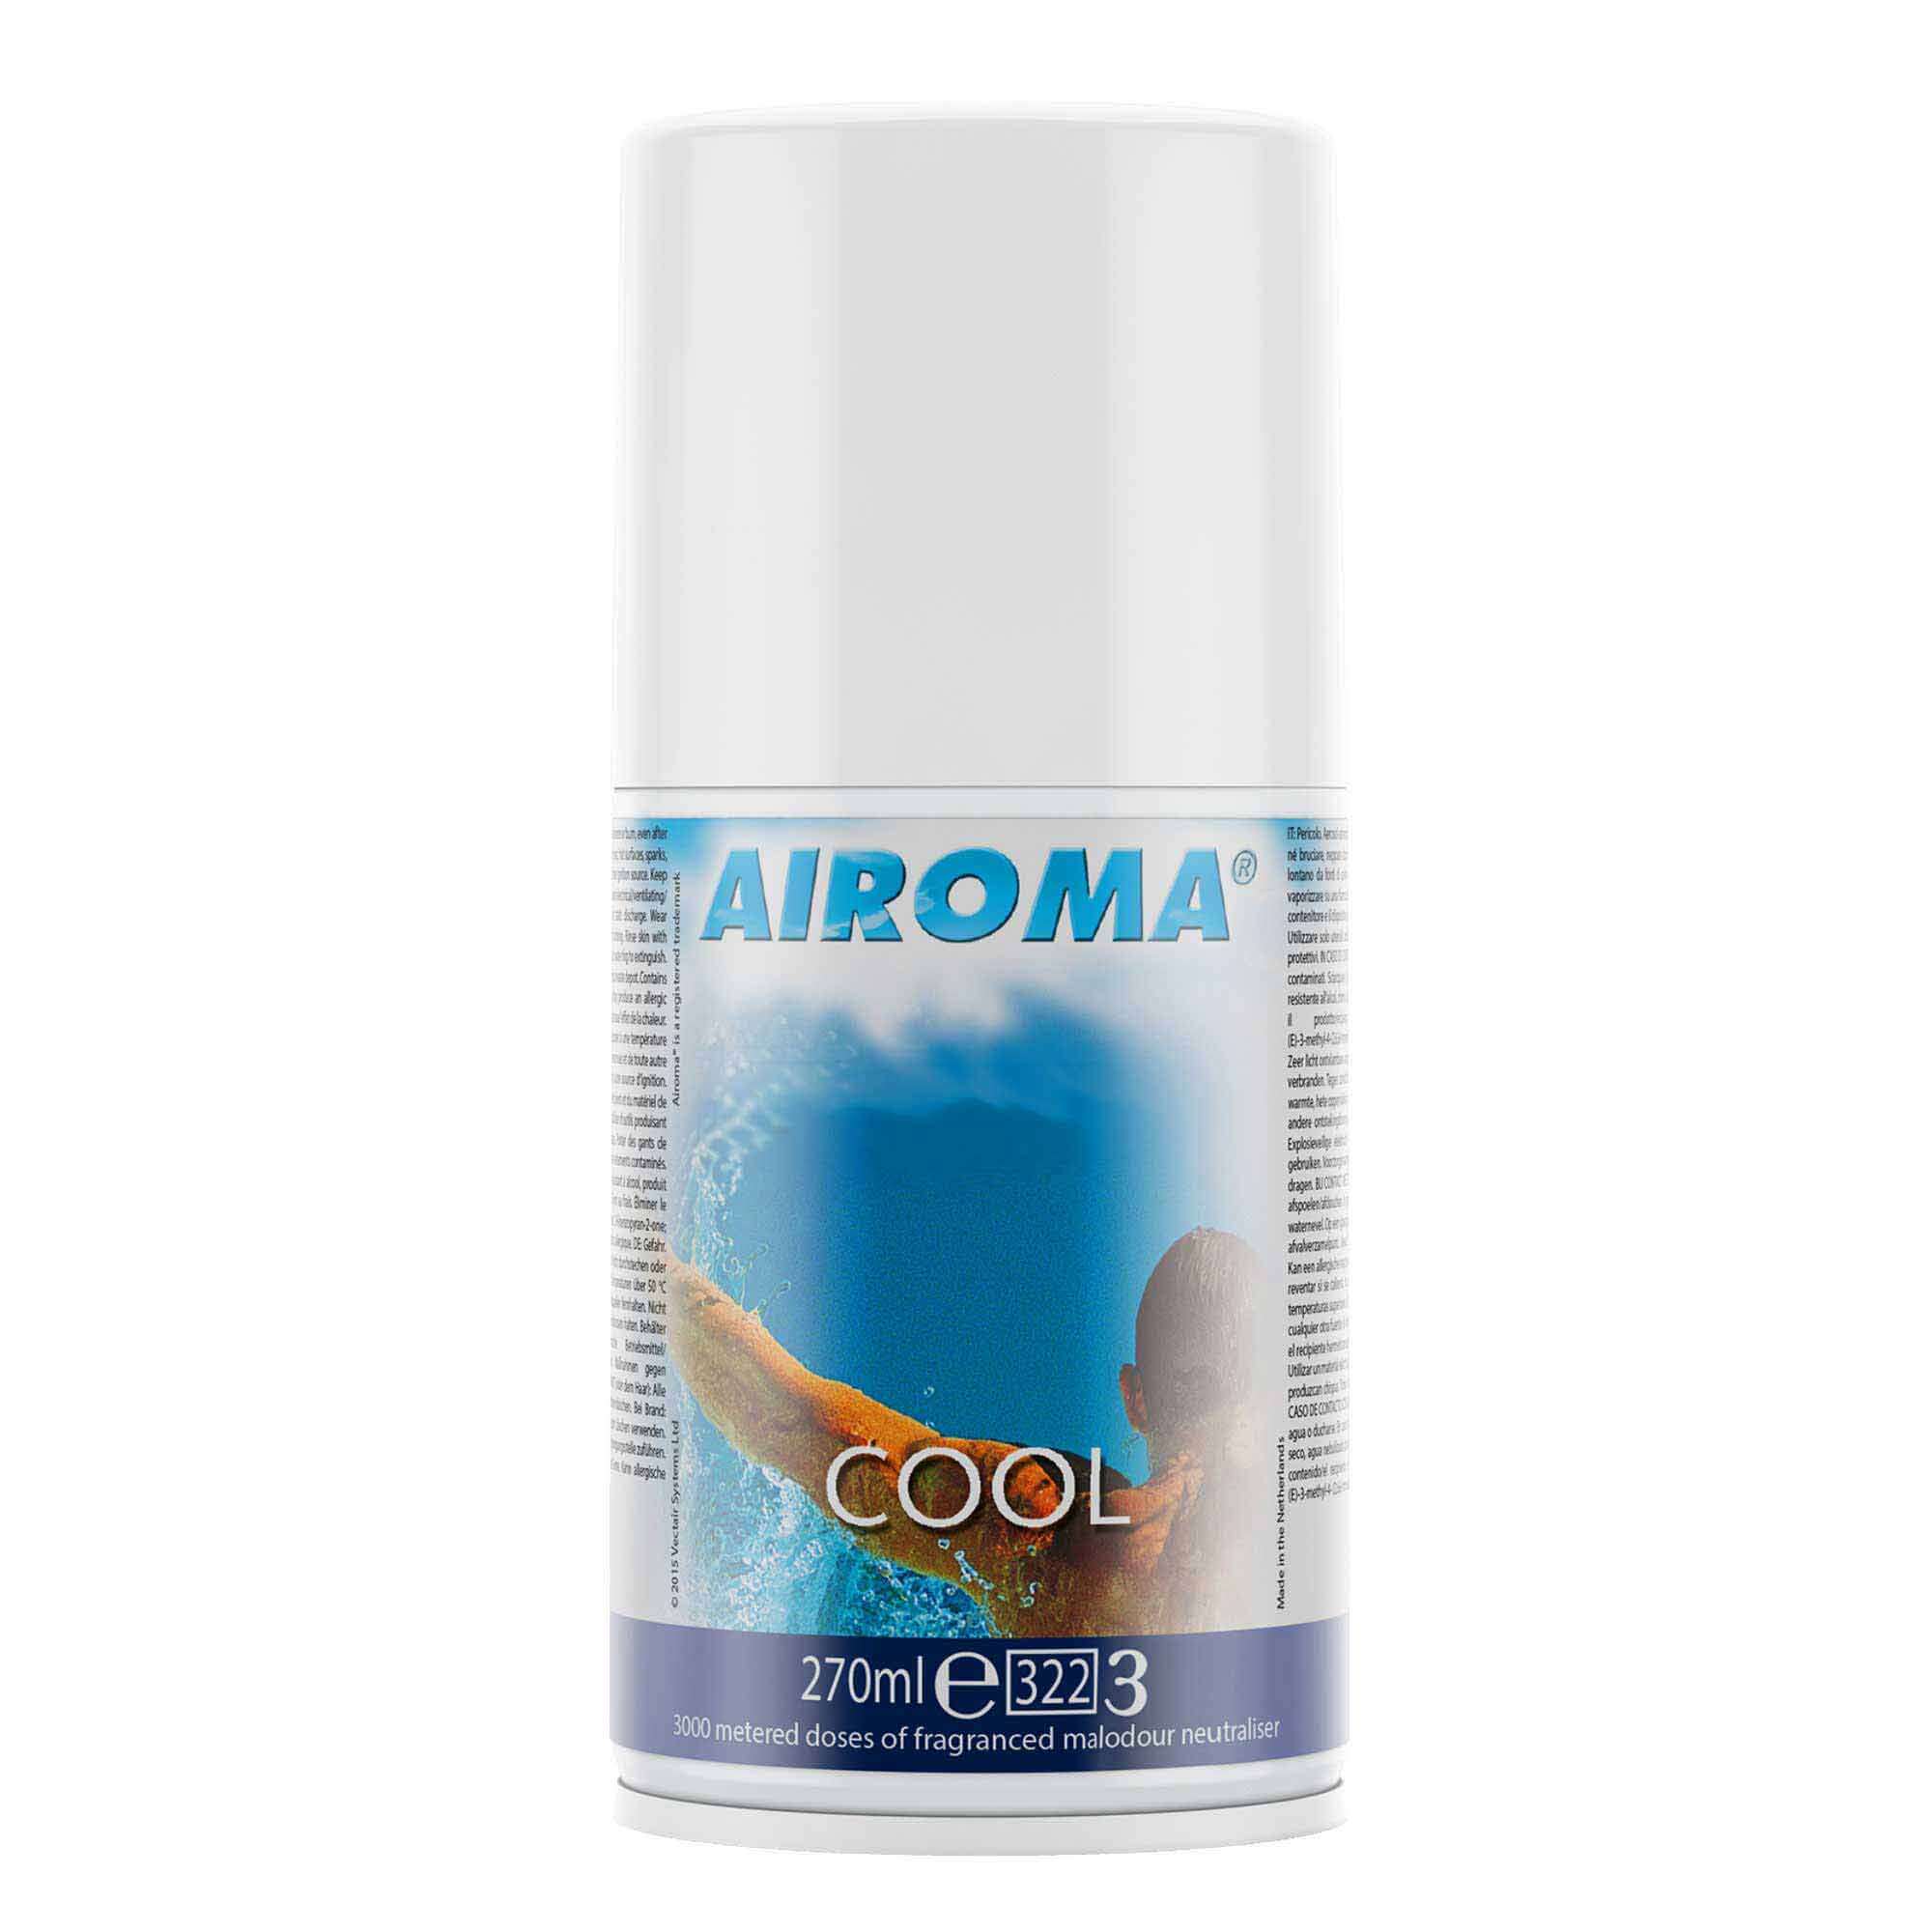 Airoma Air Freshener Refills 270ml Cool 12 Pack